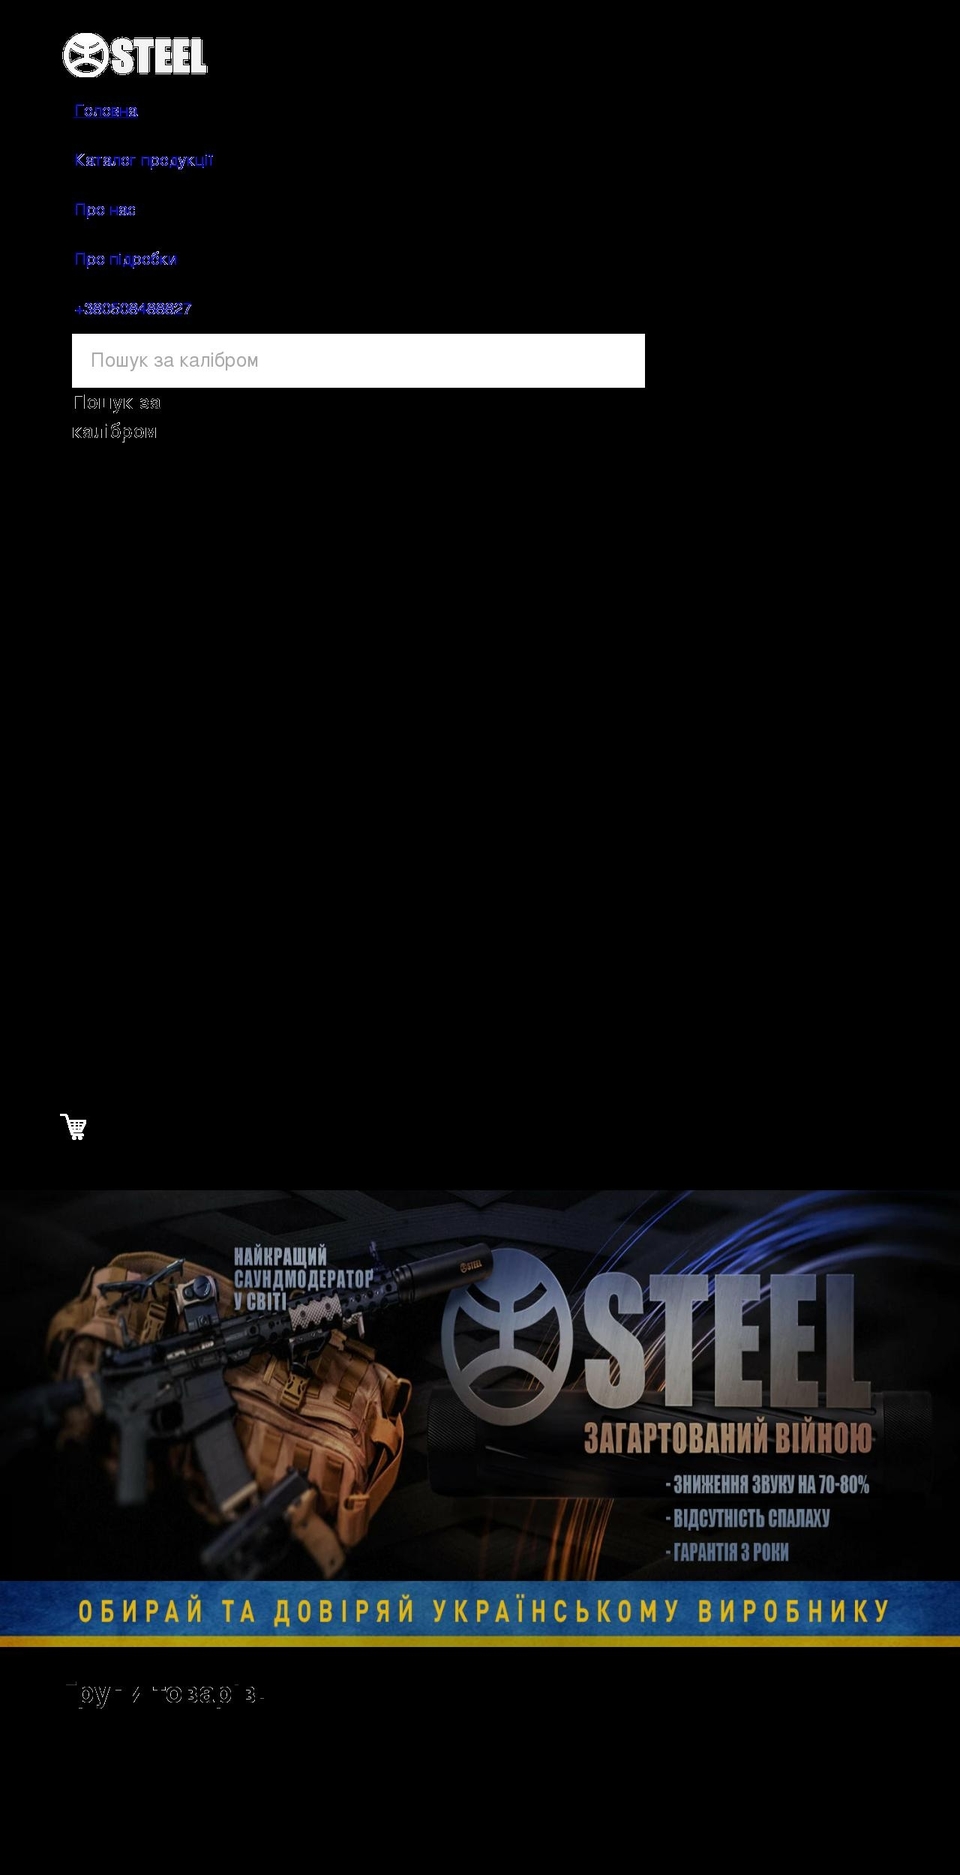 silent-steel.in.ua shopify website screenshot